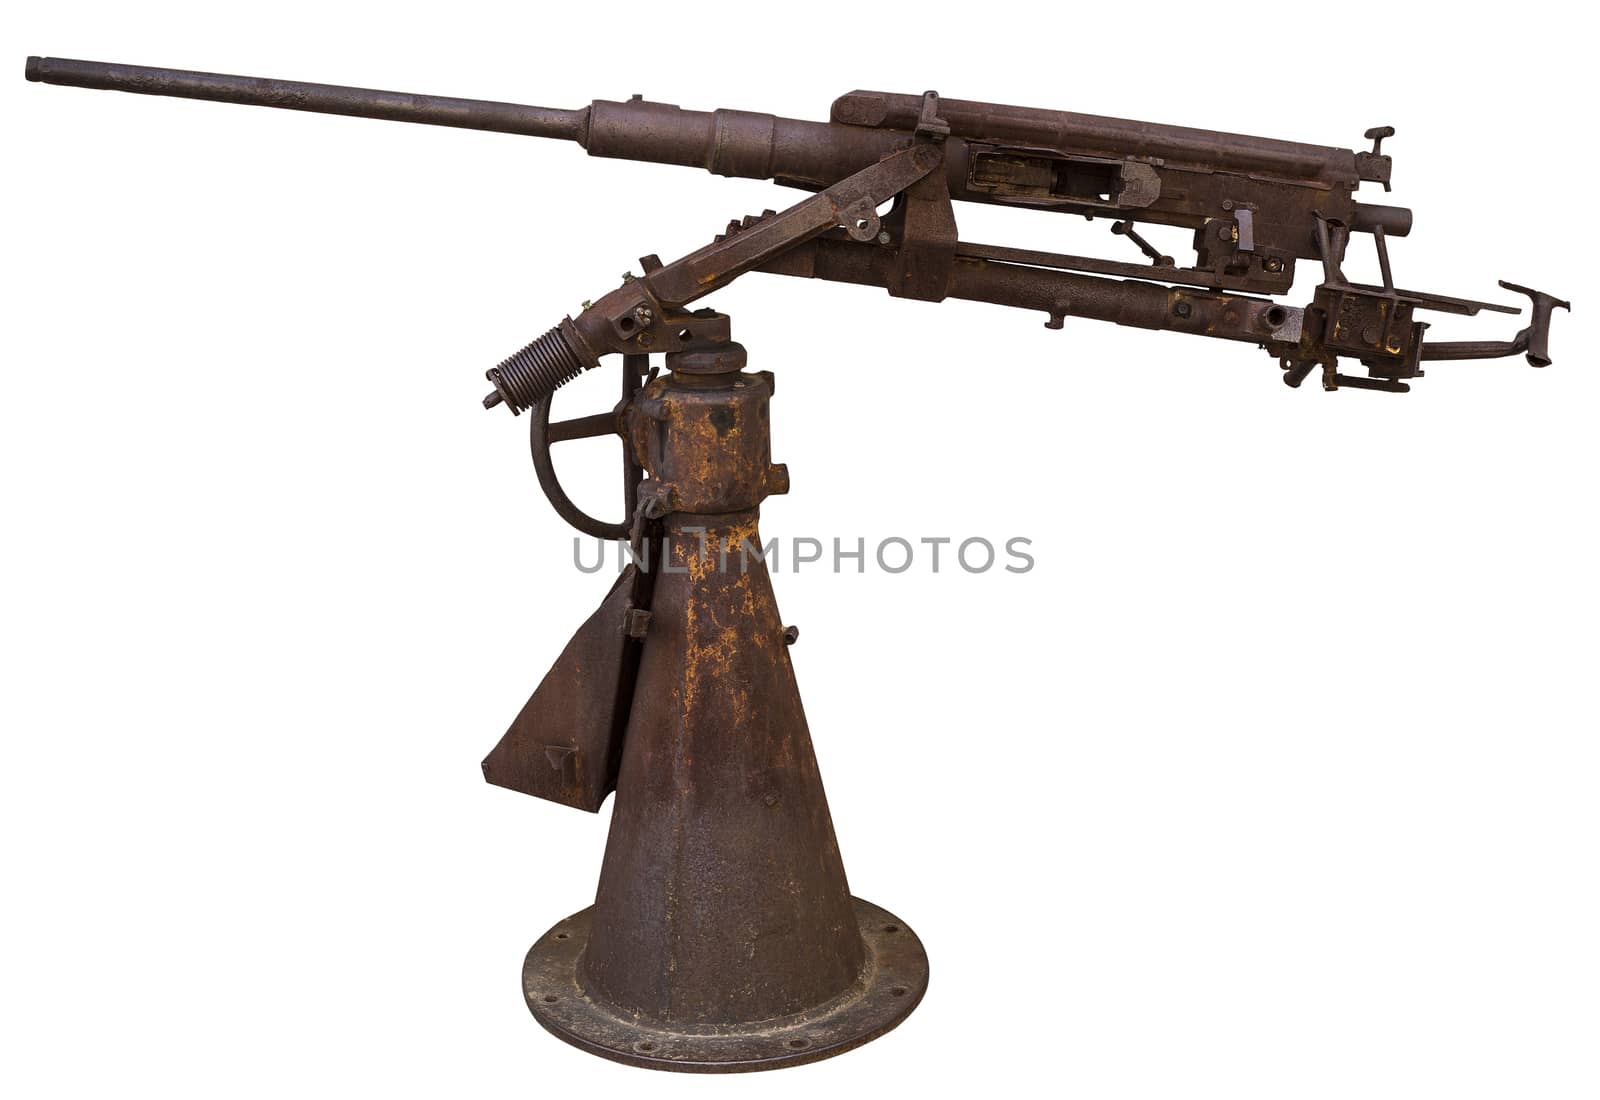 Rusty machine gun, on a white background.